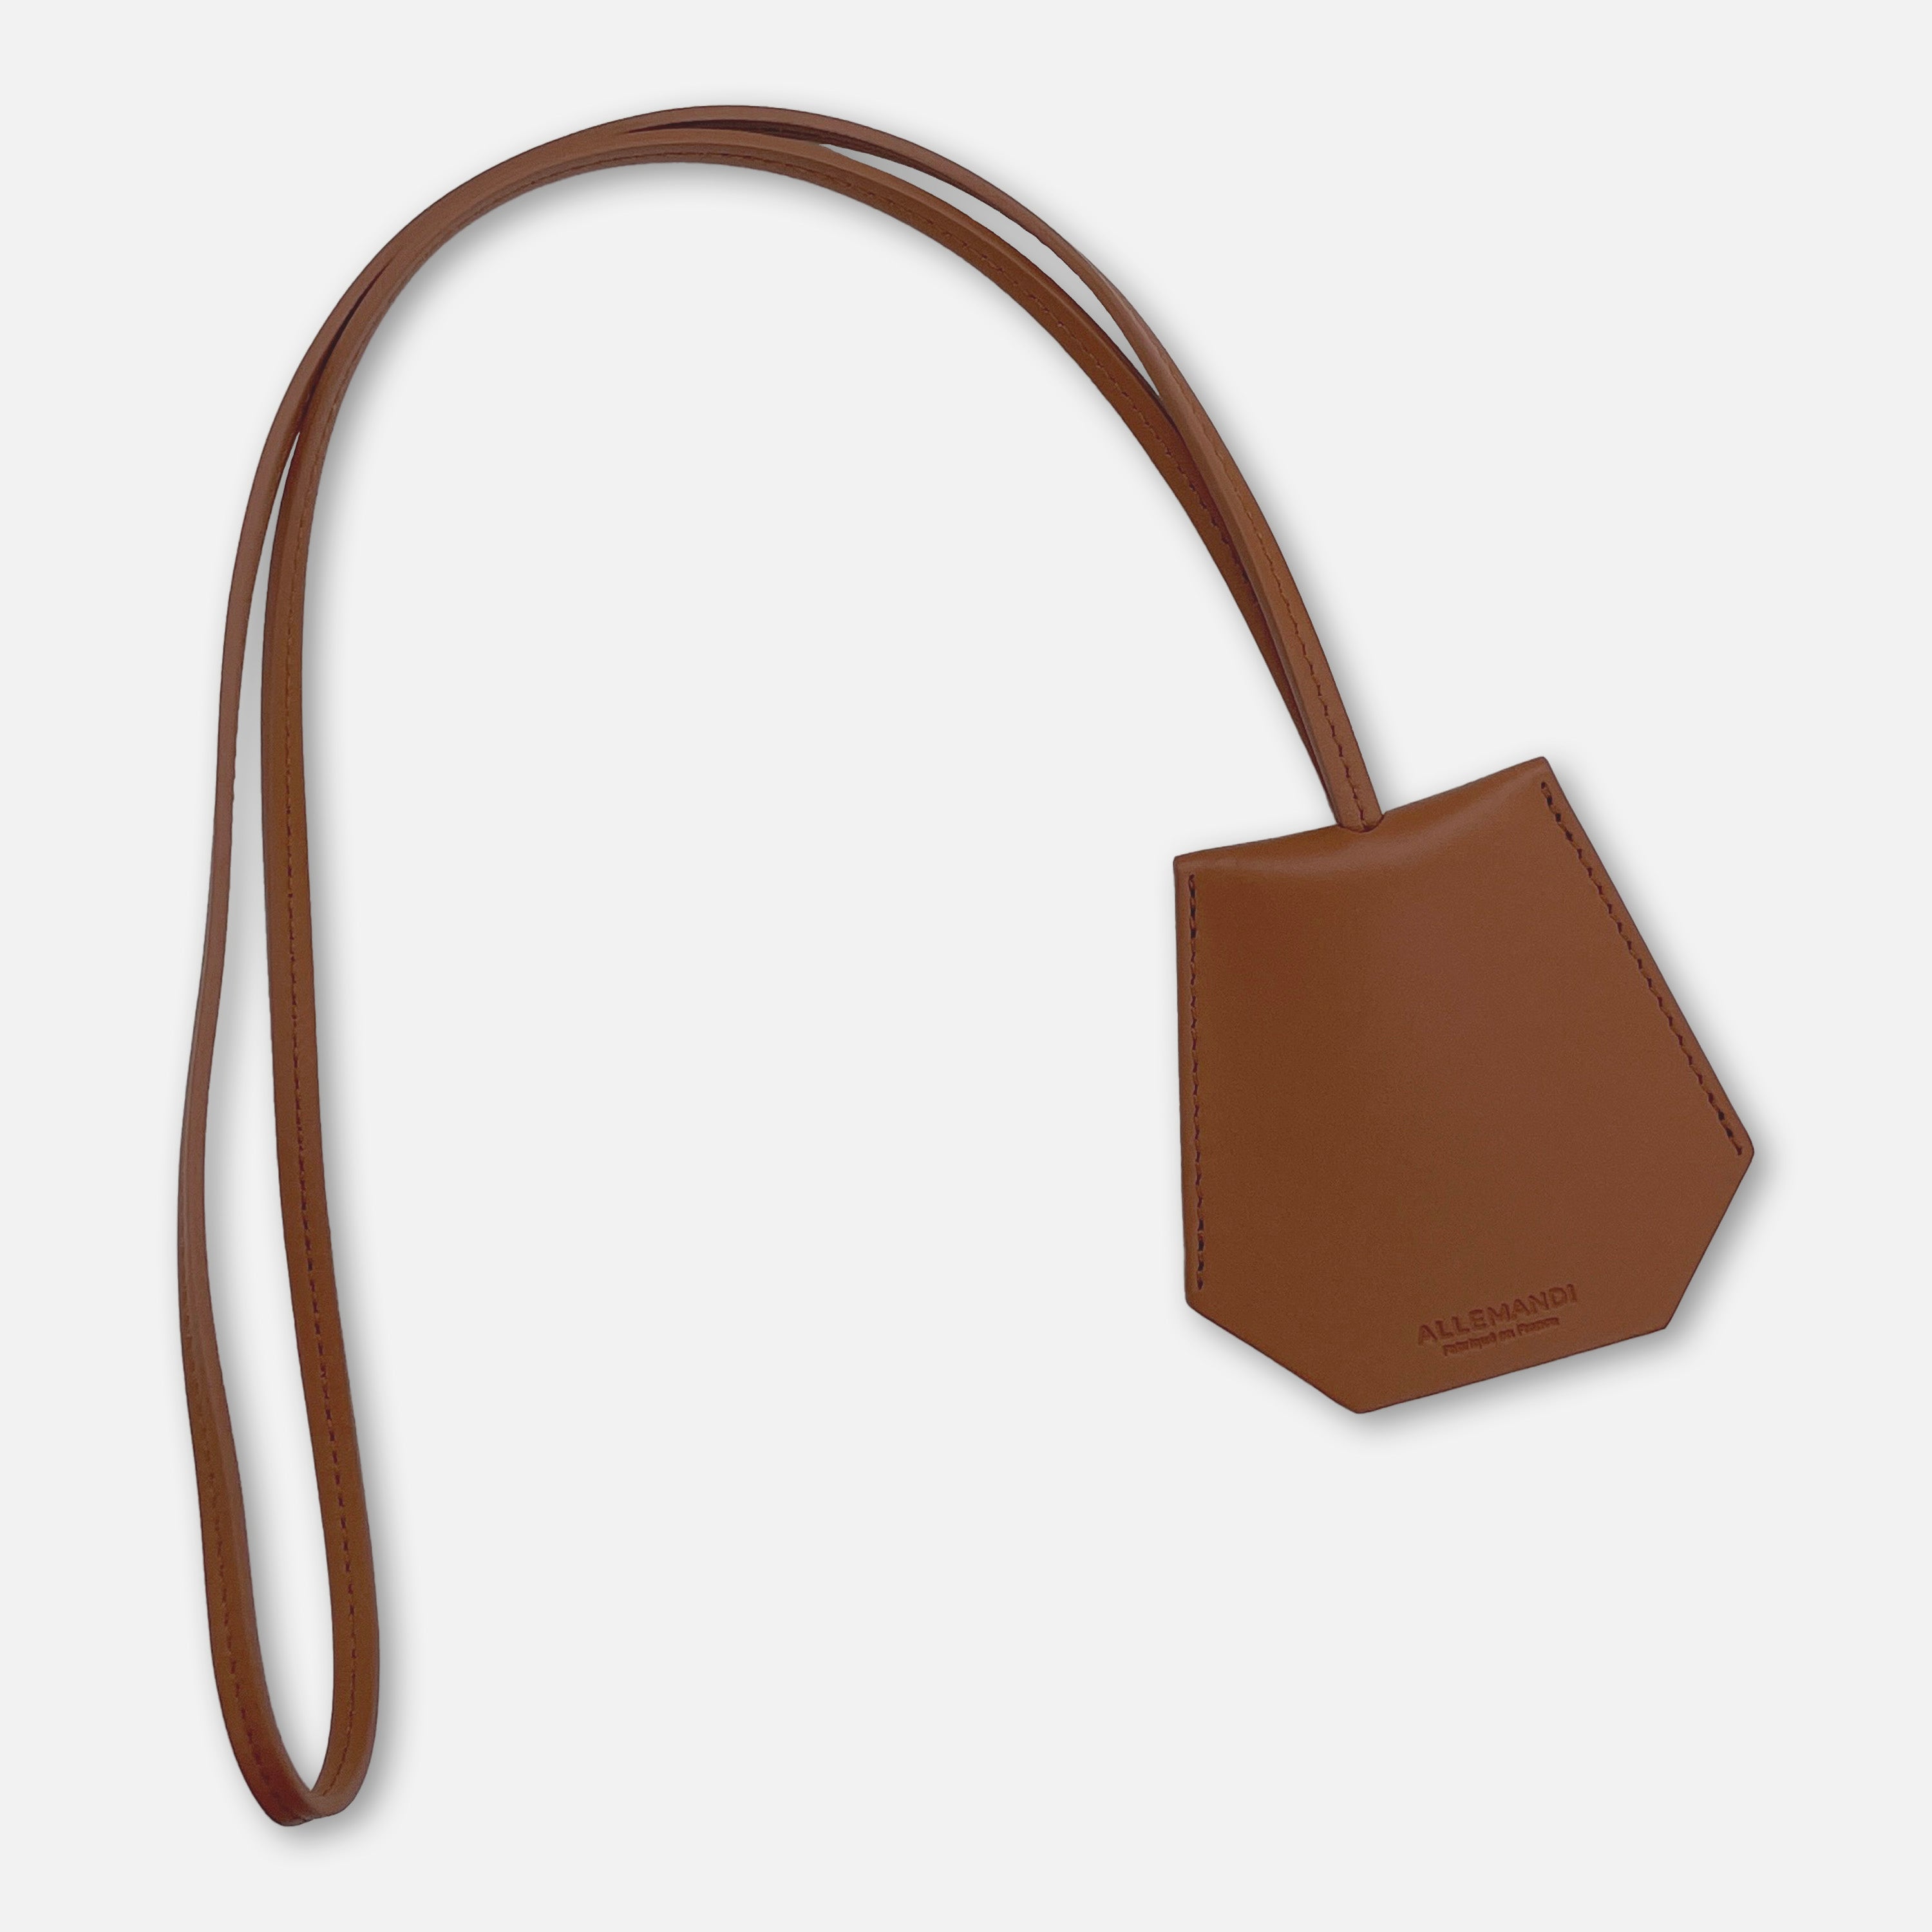 Porte-clés cloche en cuir marron, Fabriqué en France